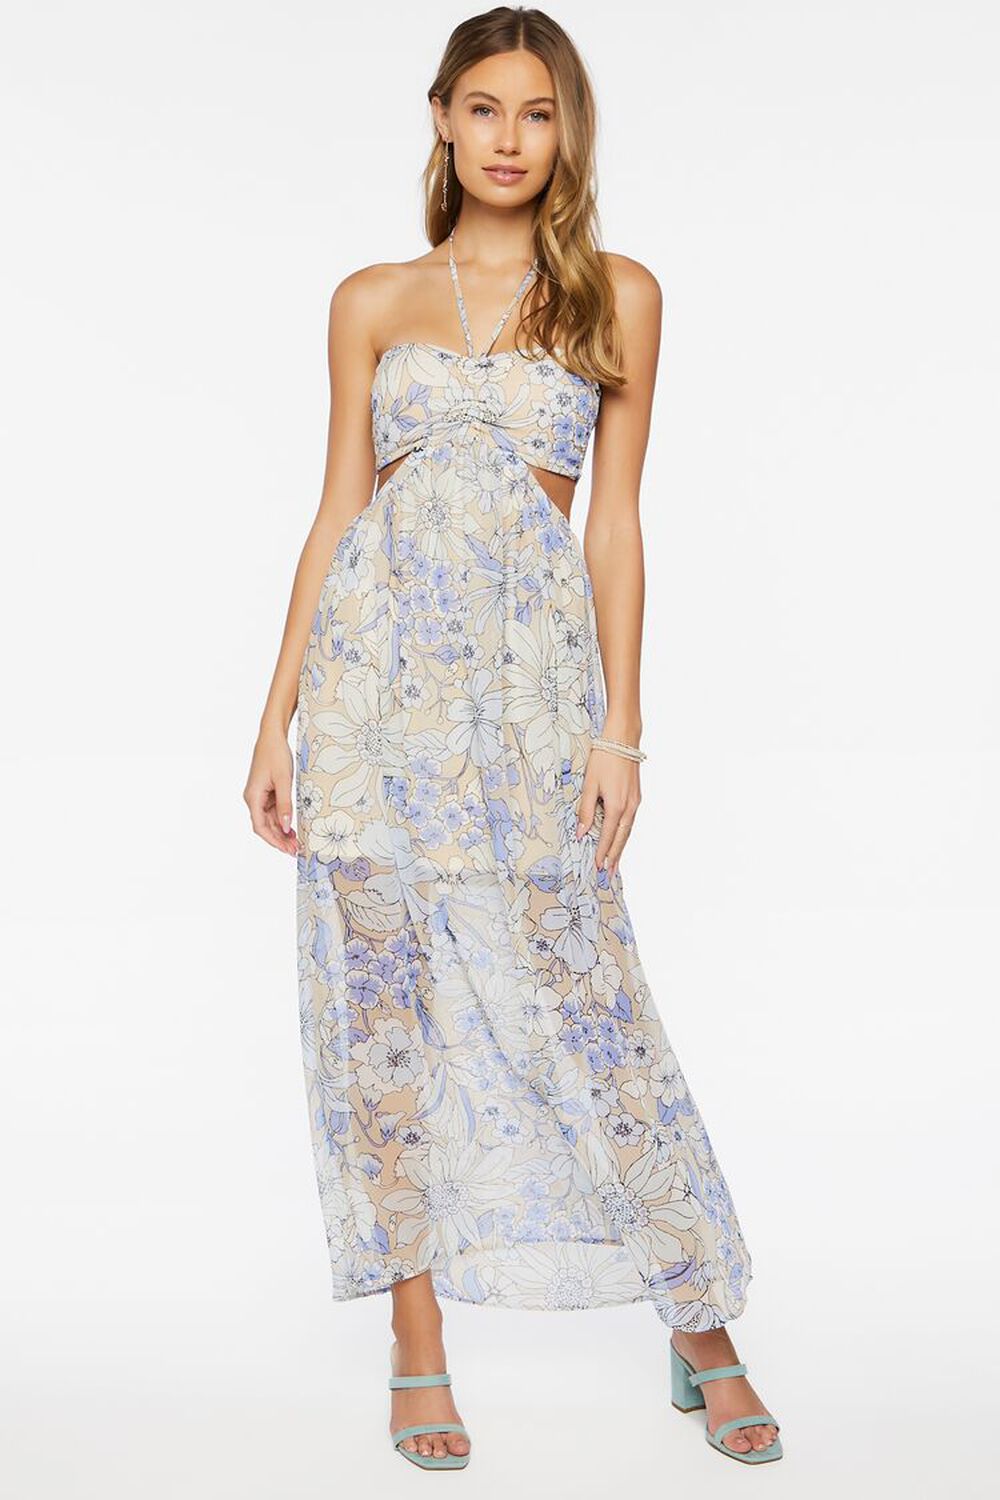 BLUE/MULTI Chiffon Floral Maxi Halter Dress, image 1